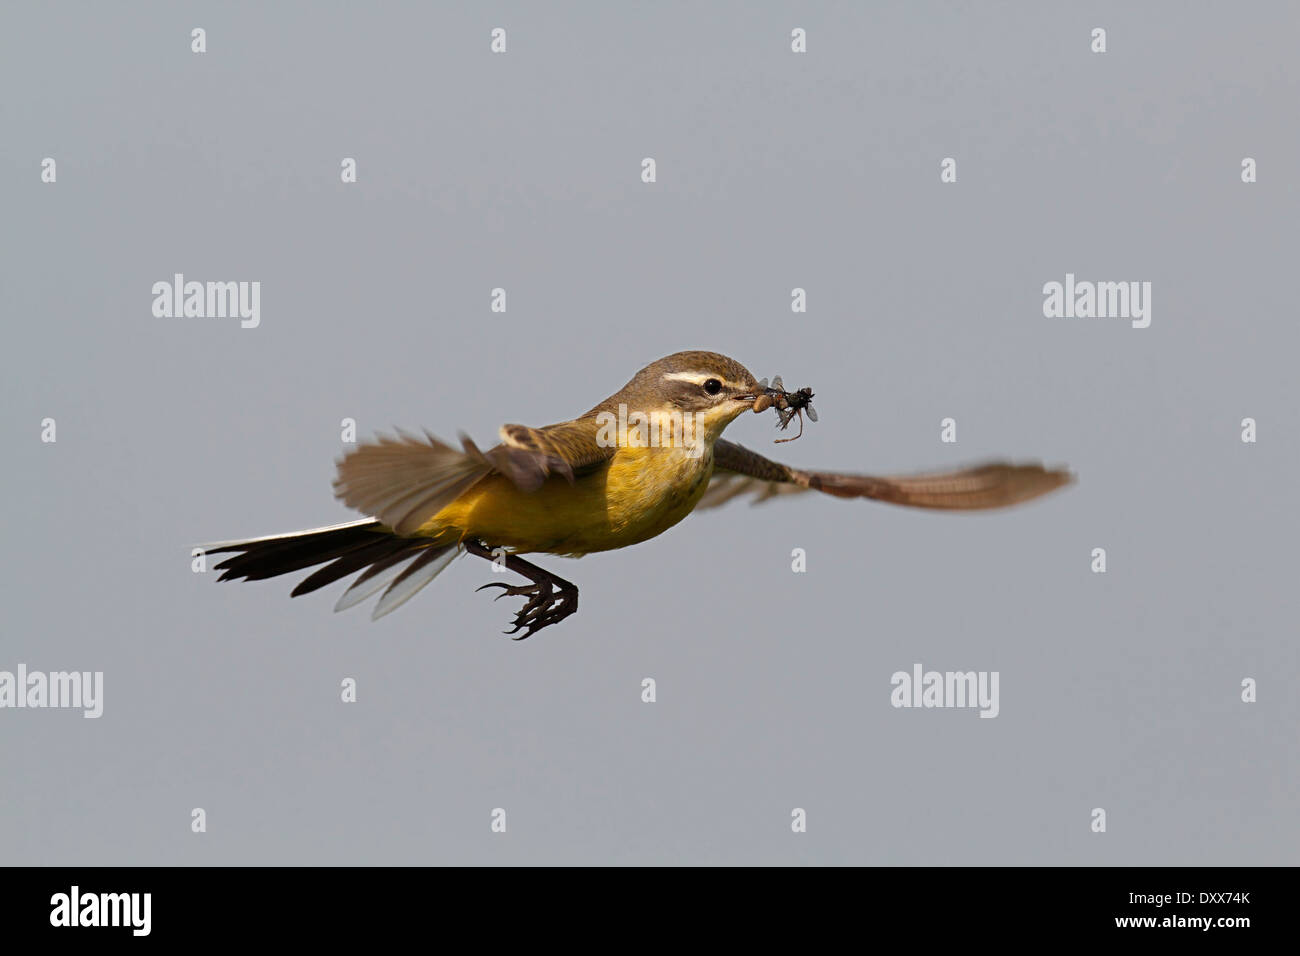 https://c8.alamy.com/comp/DXX74K/western-yellow-wagtail-motacilla-flava-in-hovering-flight-with-prey-DXX74K.jpg